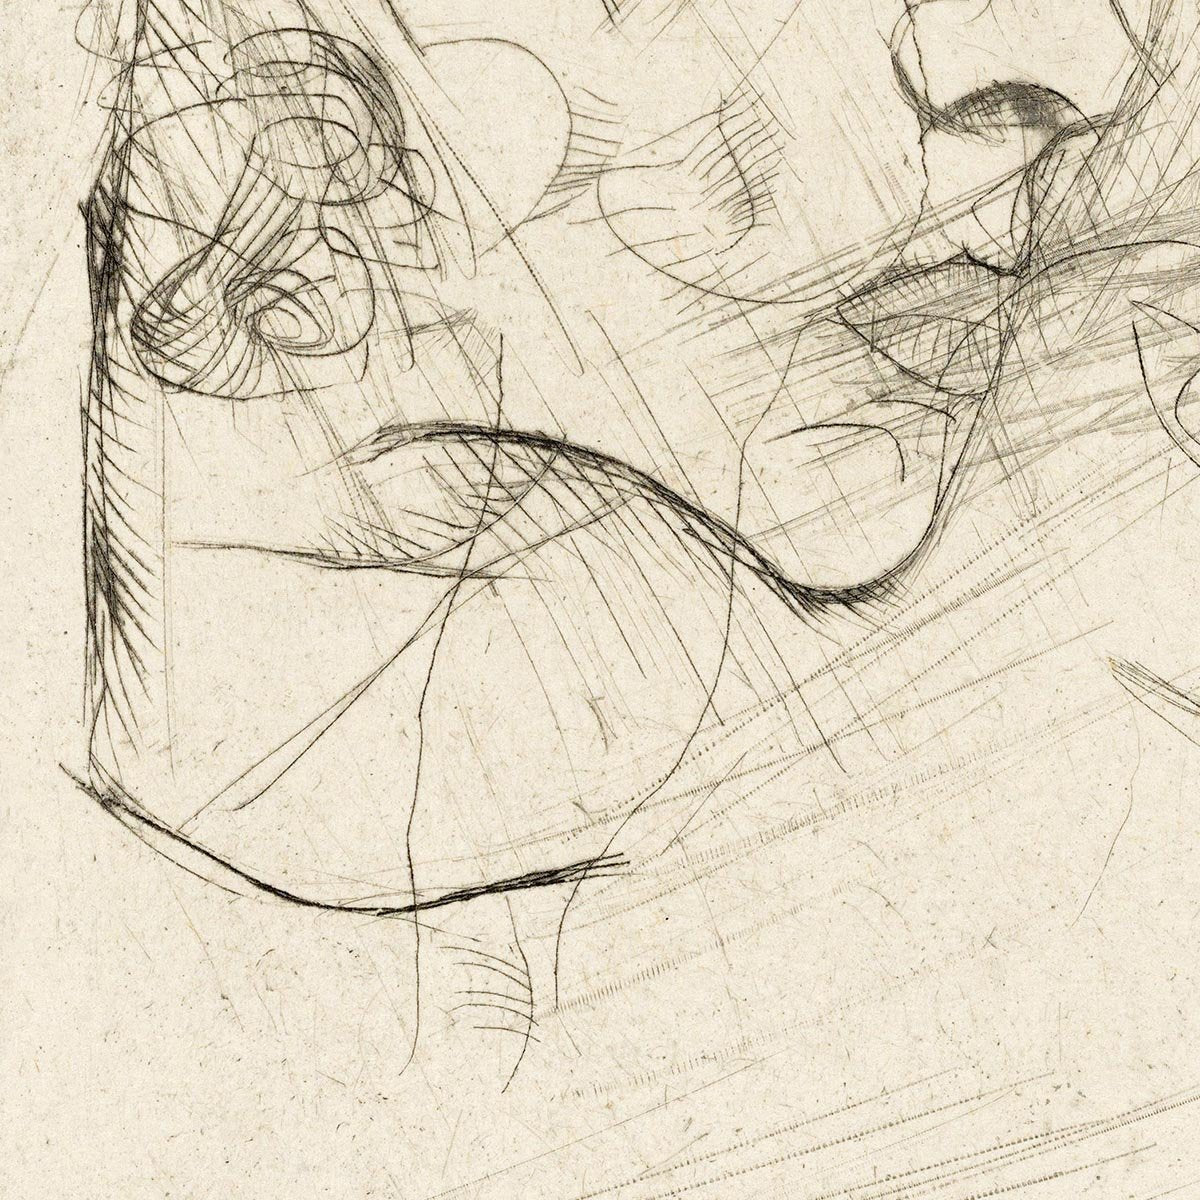 Self portrait by Egon Schiele